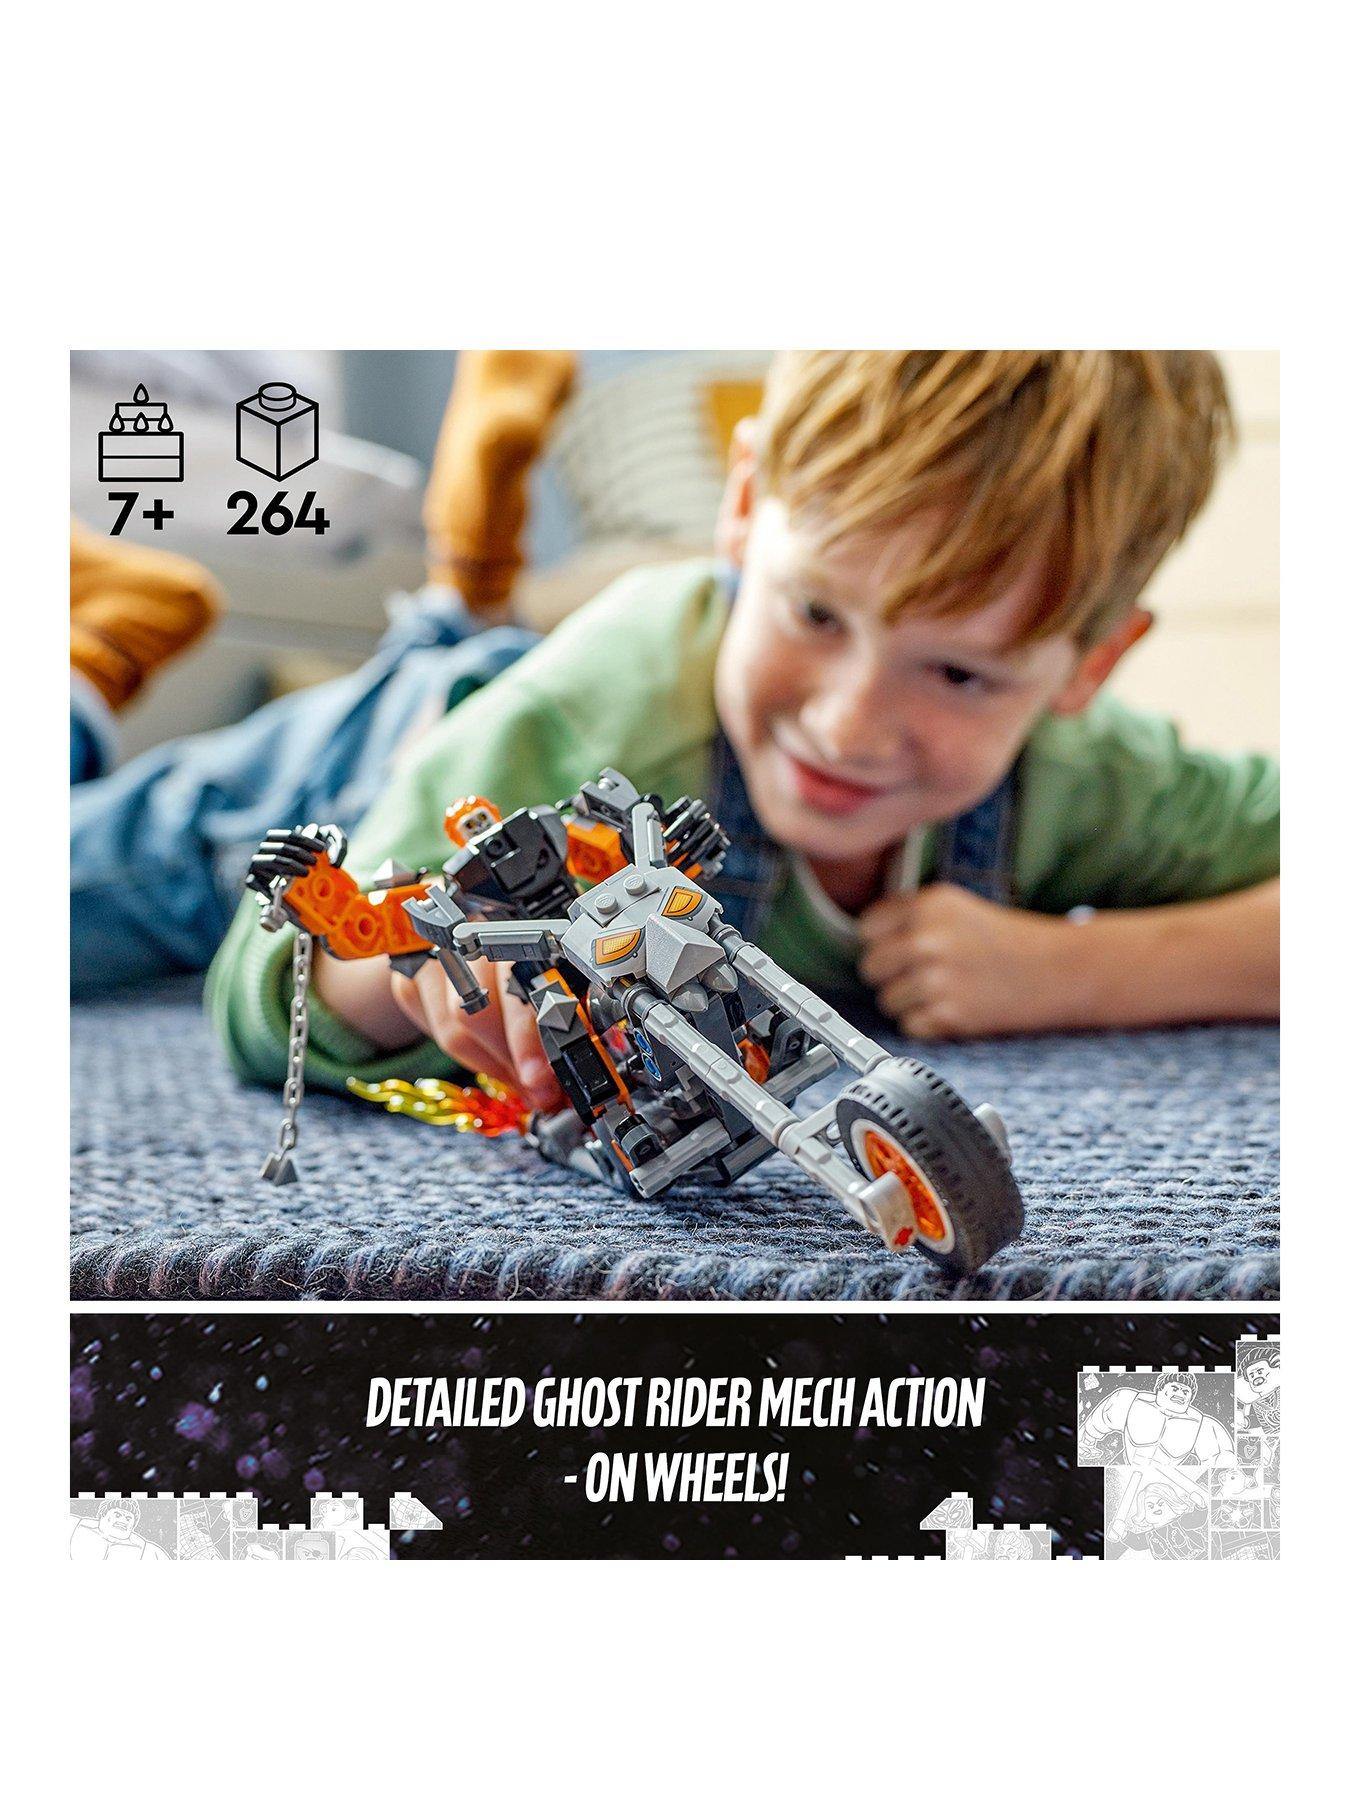 LEGO Marvel Ghost Rider Mech & Bike Motorbike Toy 76245 